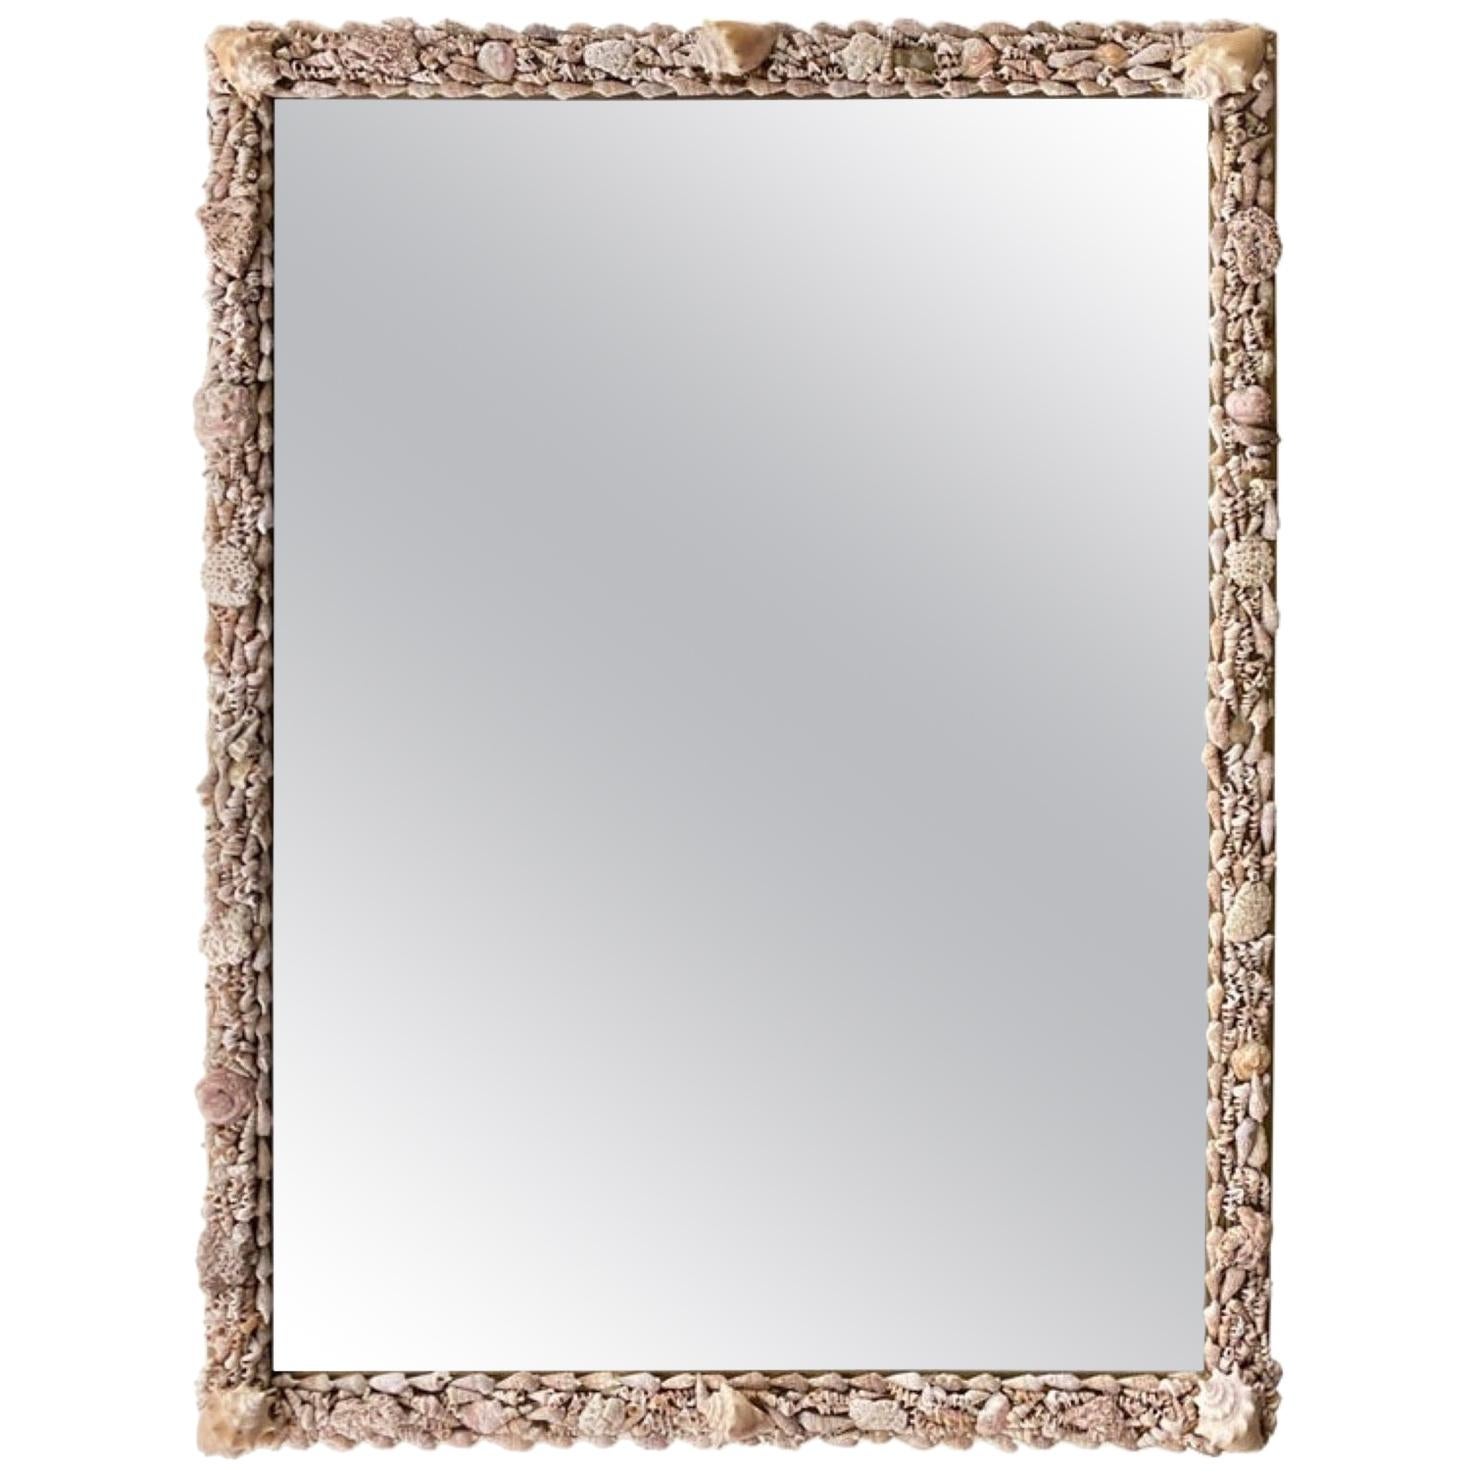 Seashell Encrusted Mirror